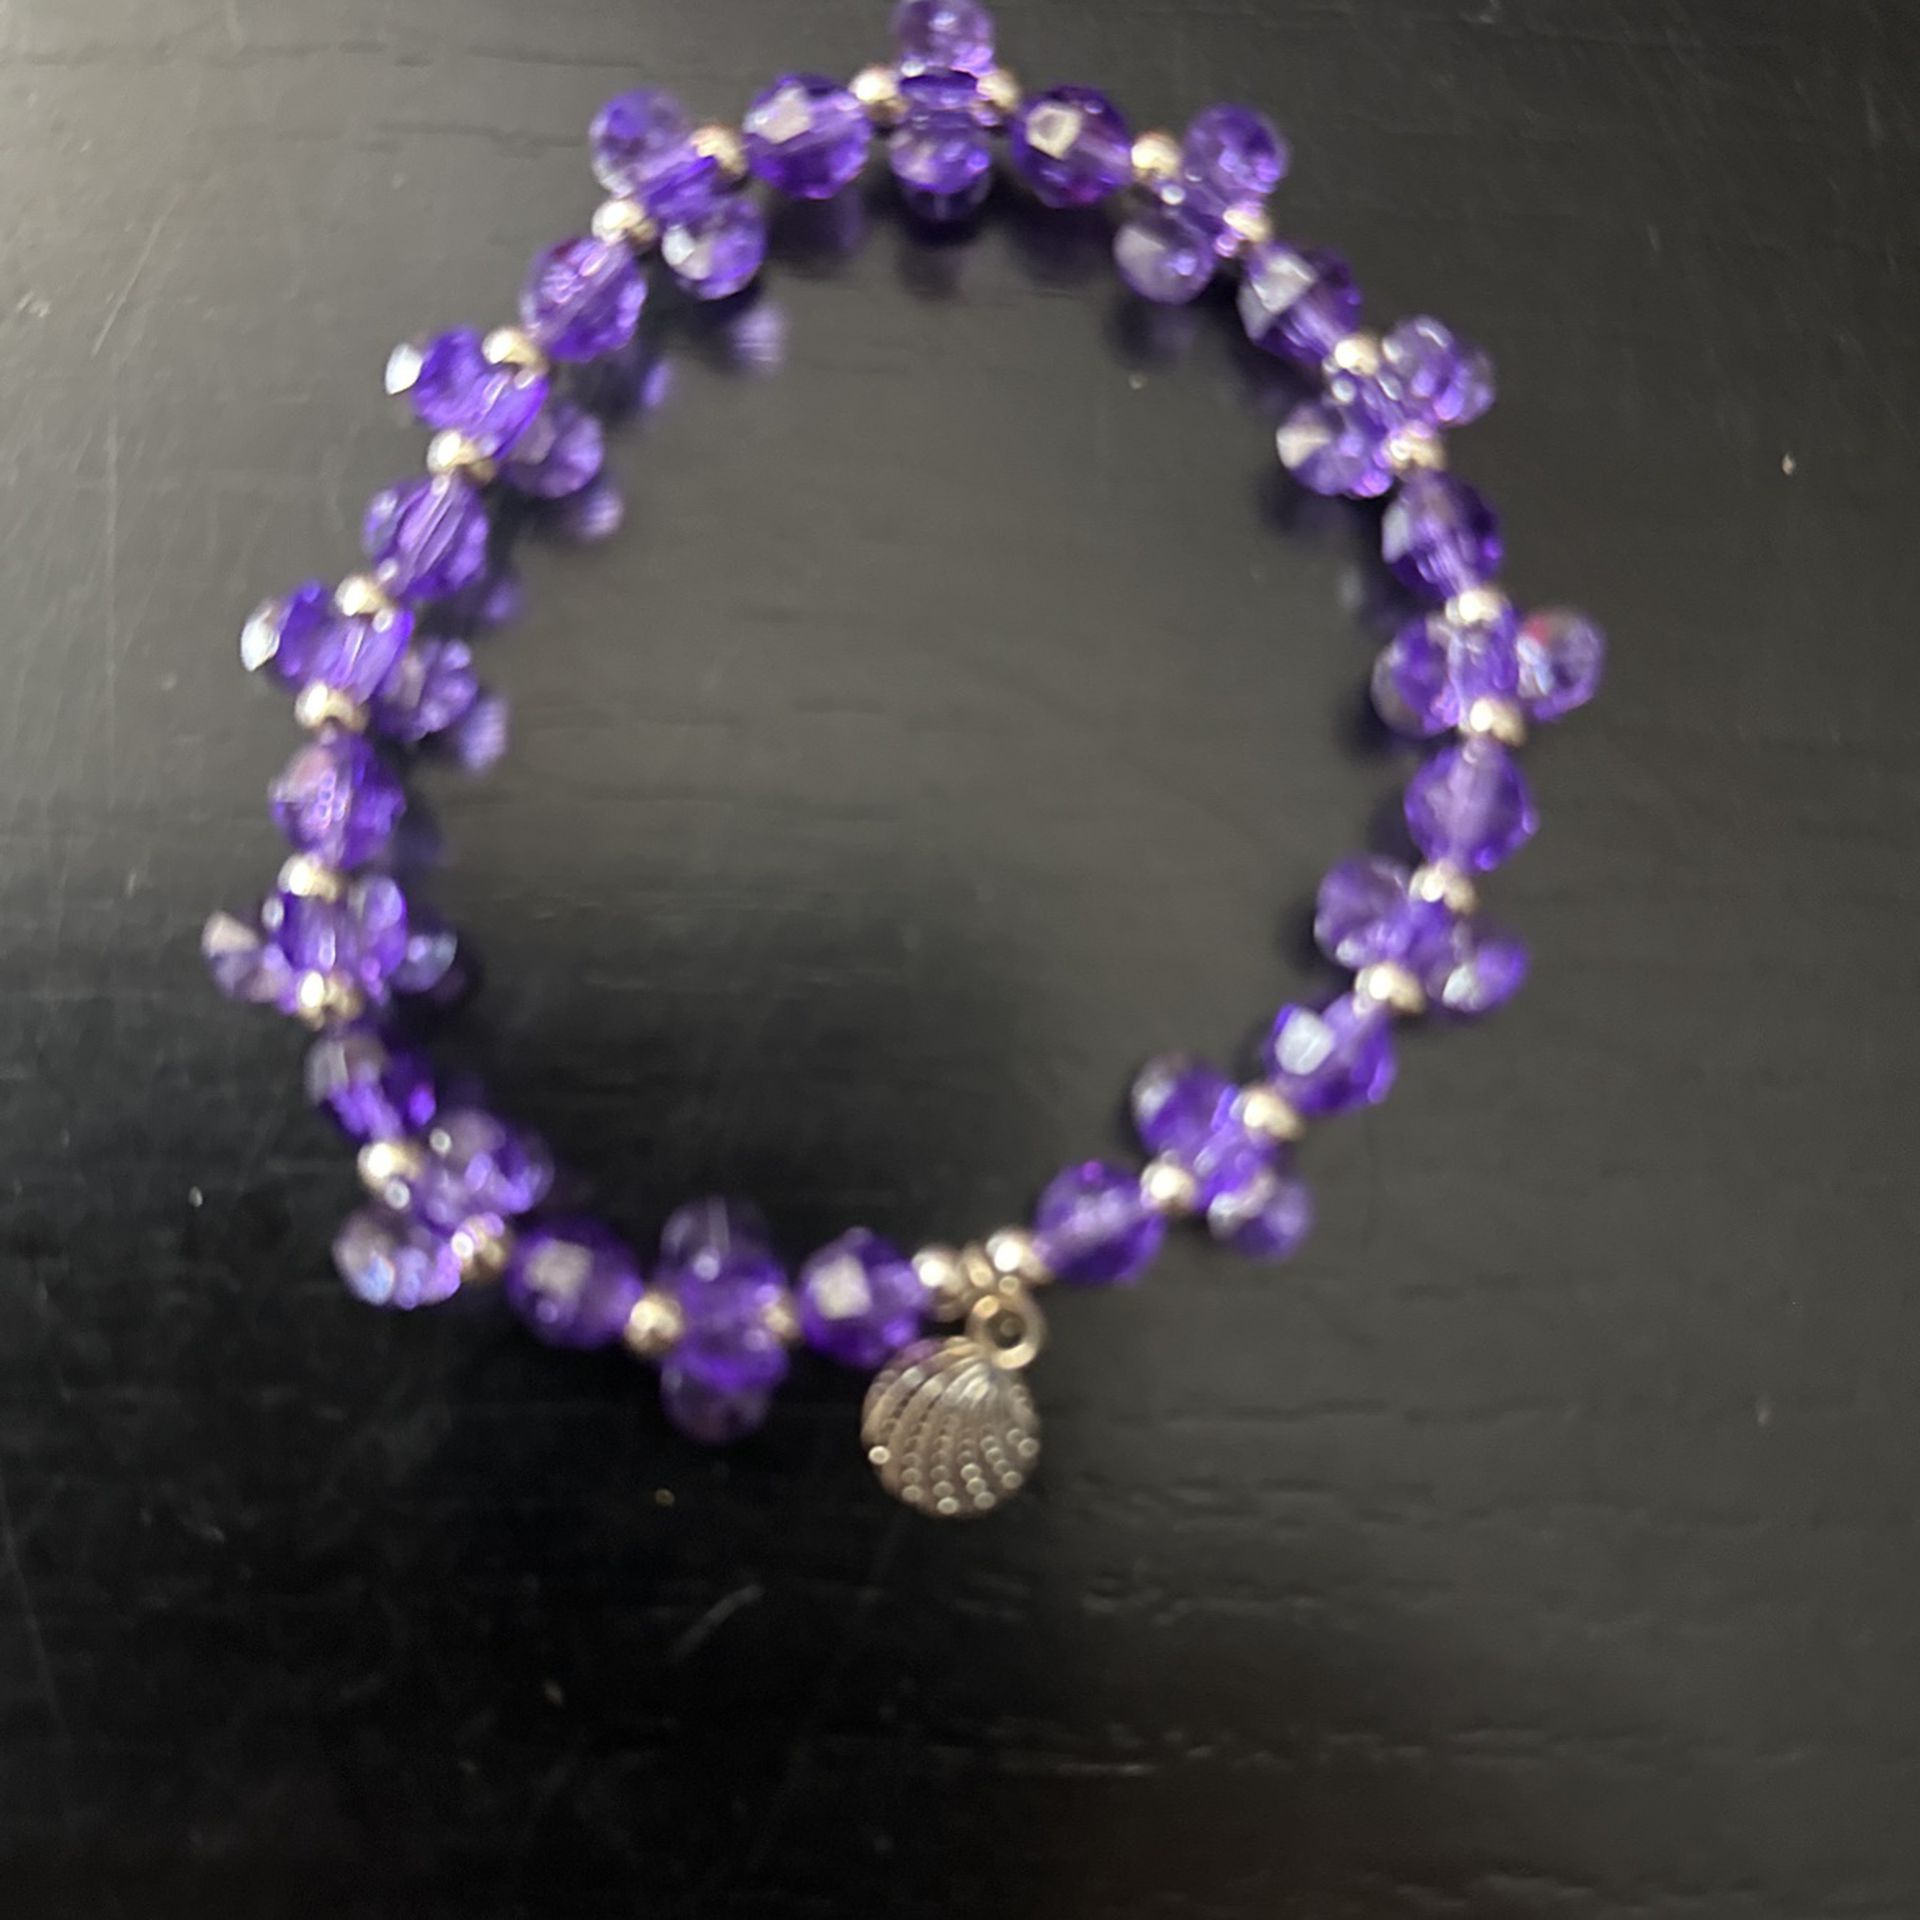 Purple Flower Beads Bracelet With A Shell Charm